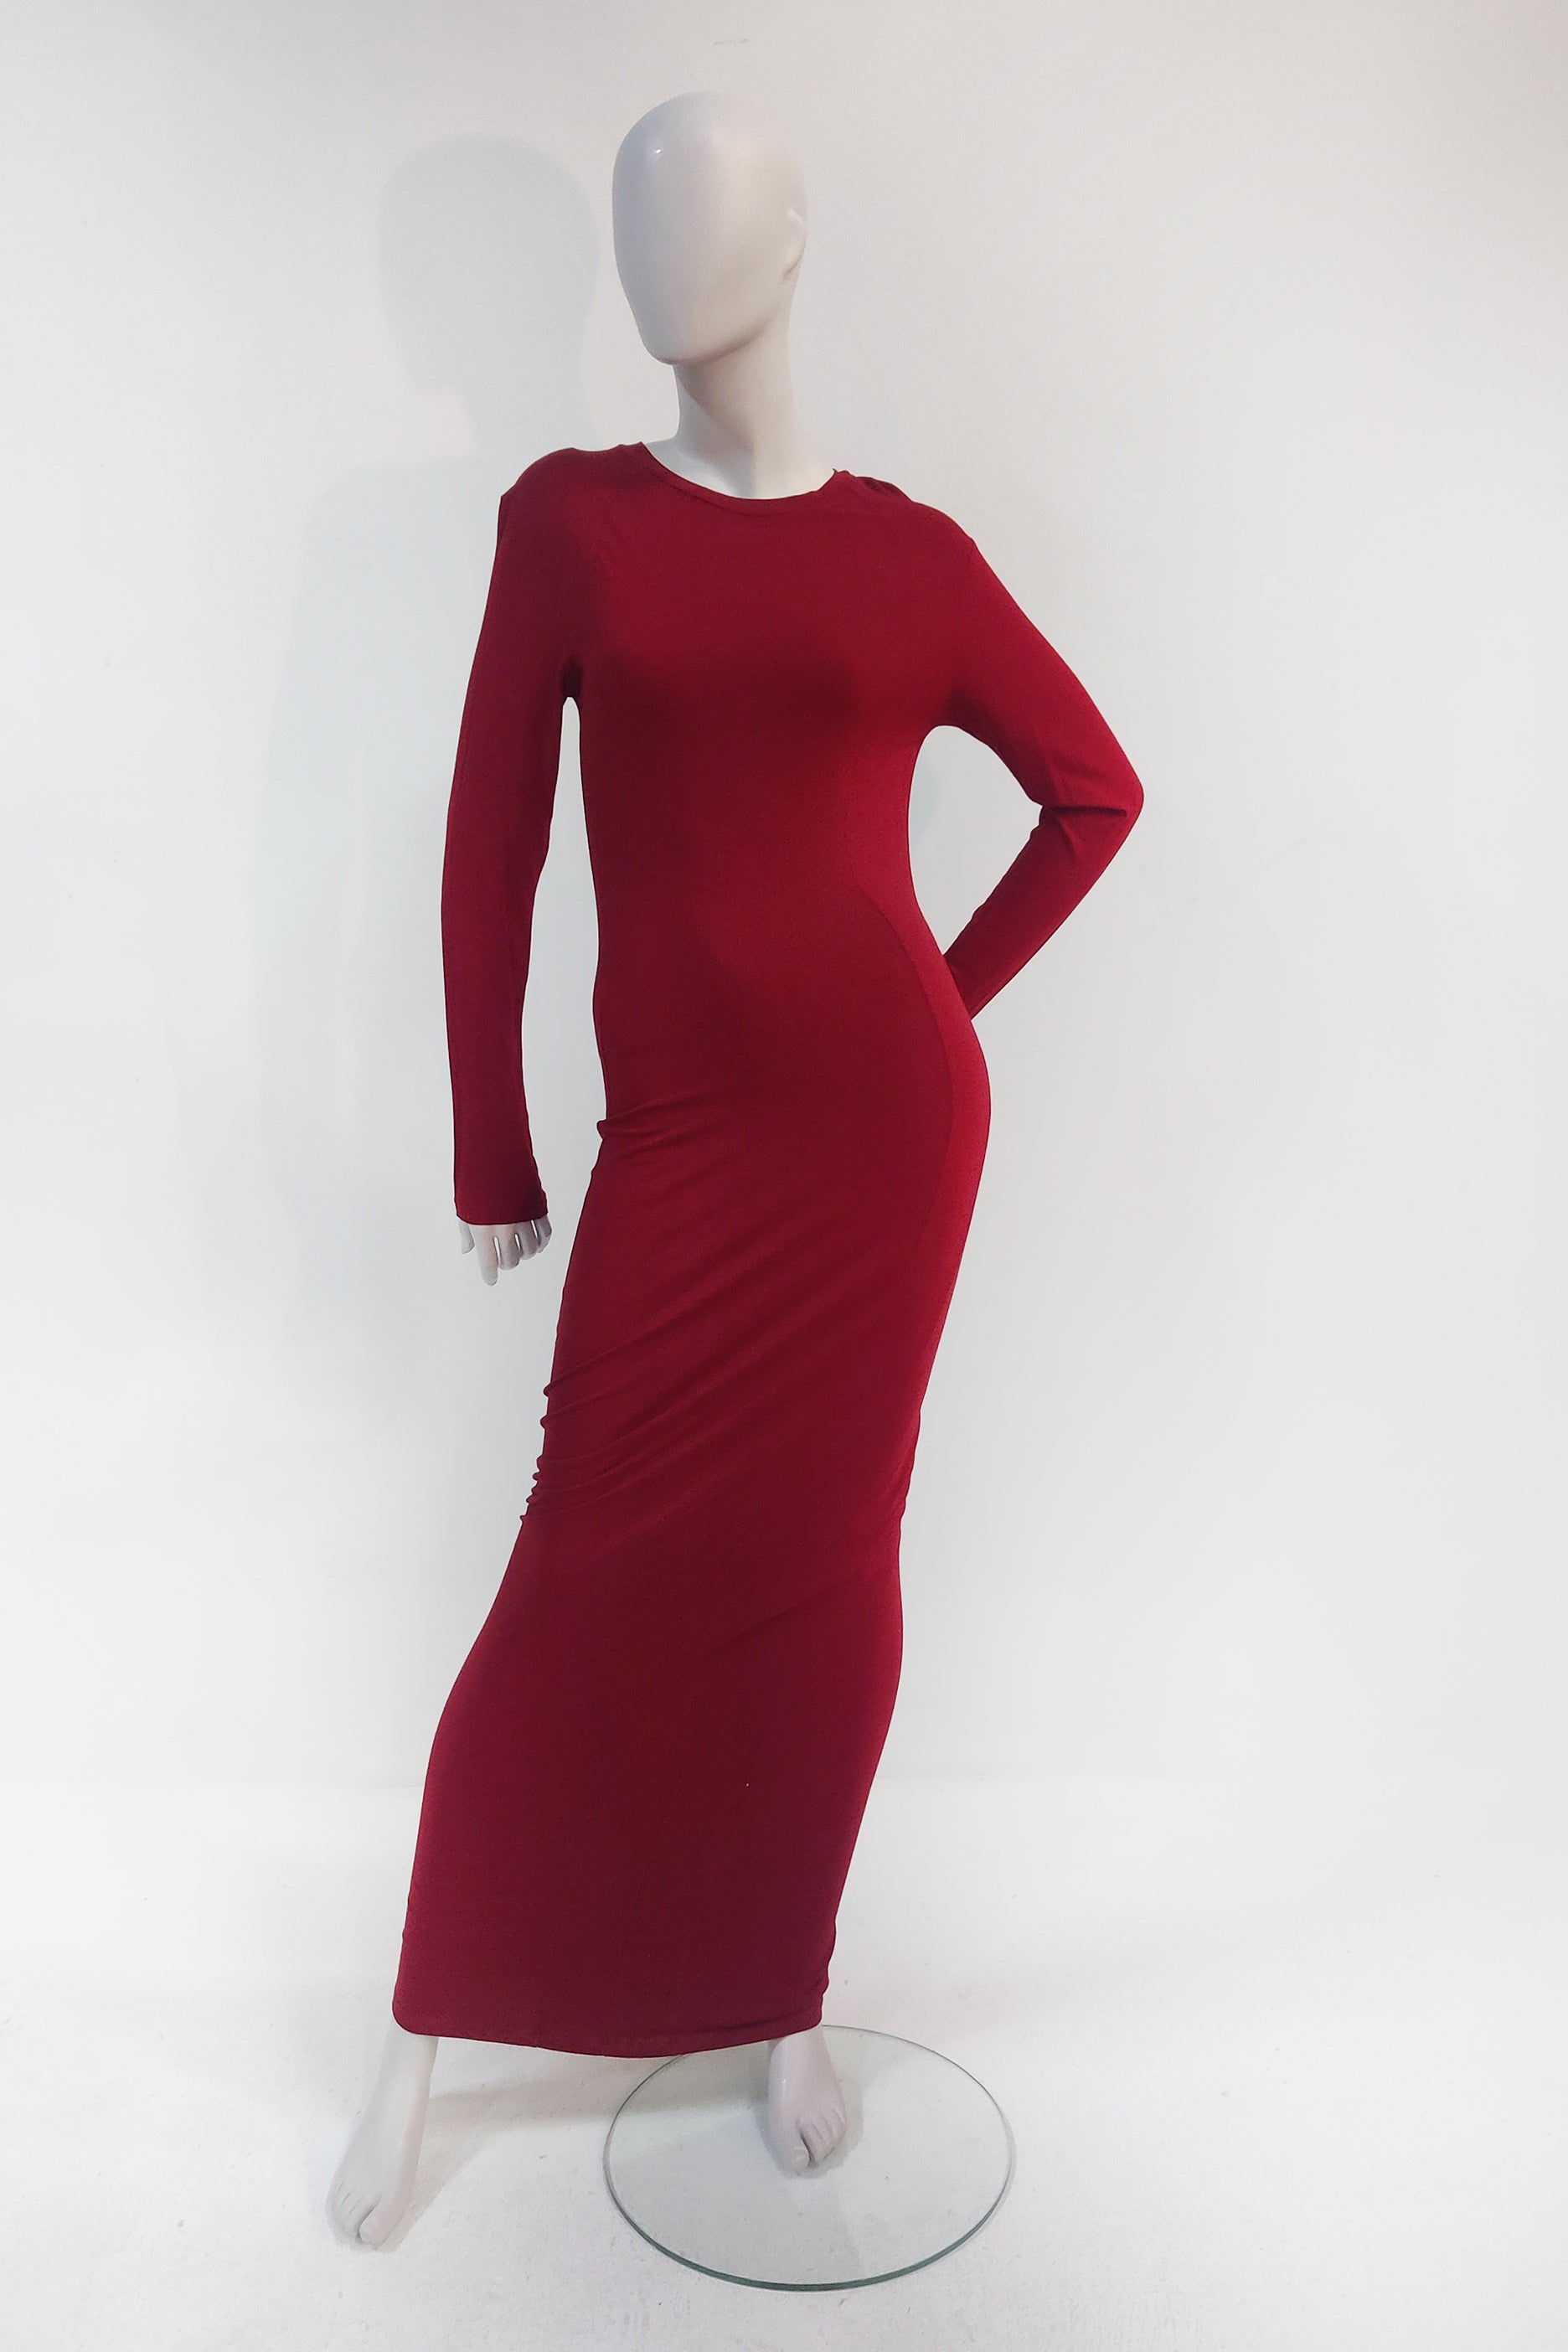 Long Red Body-Con Dress (medium)